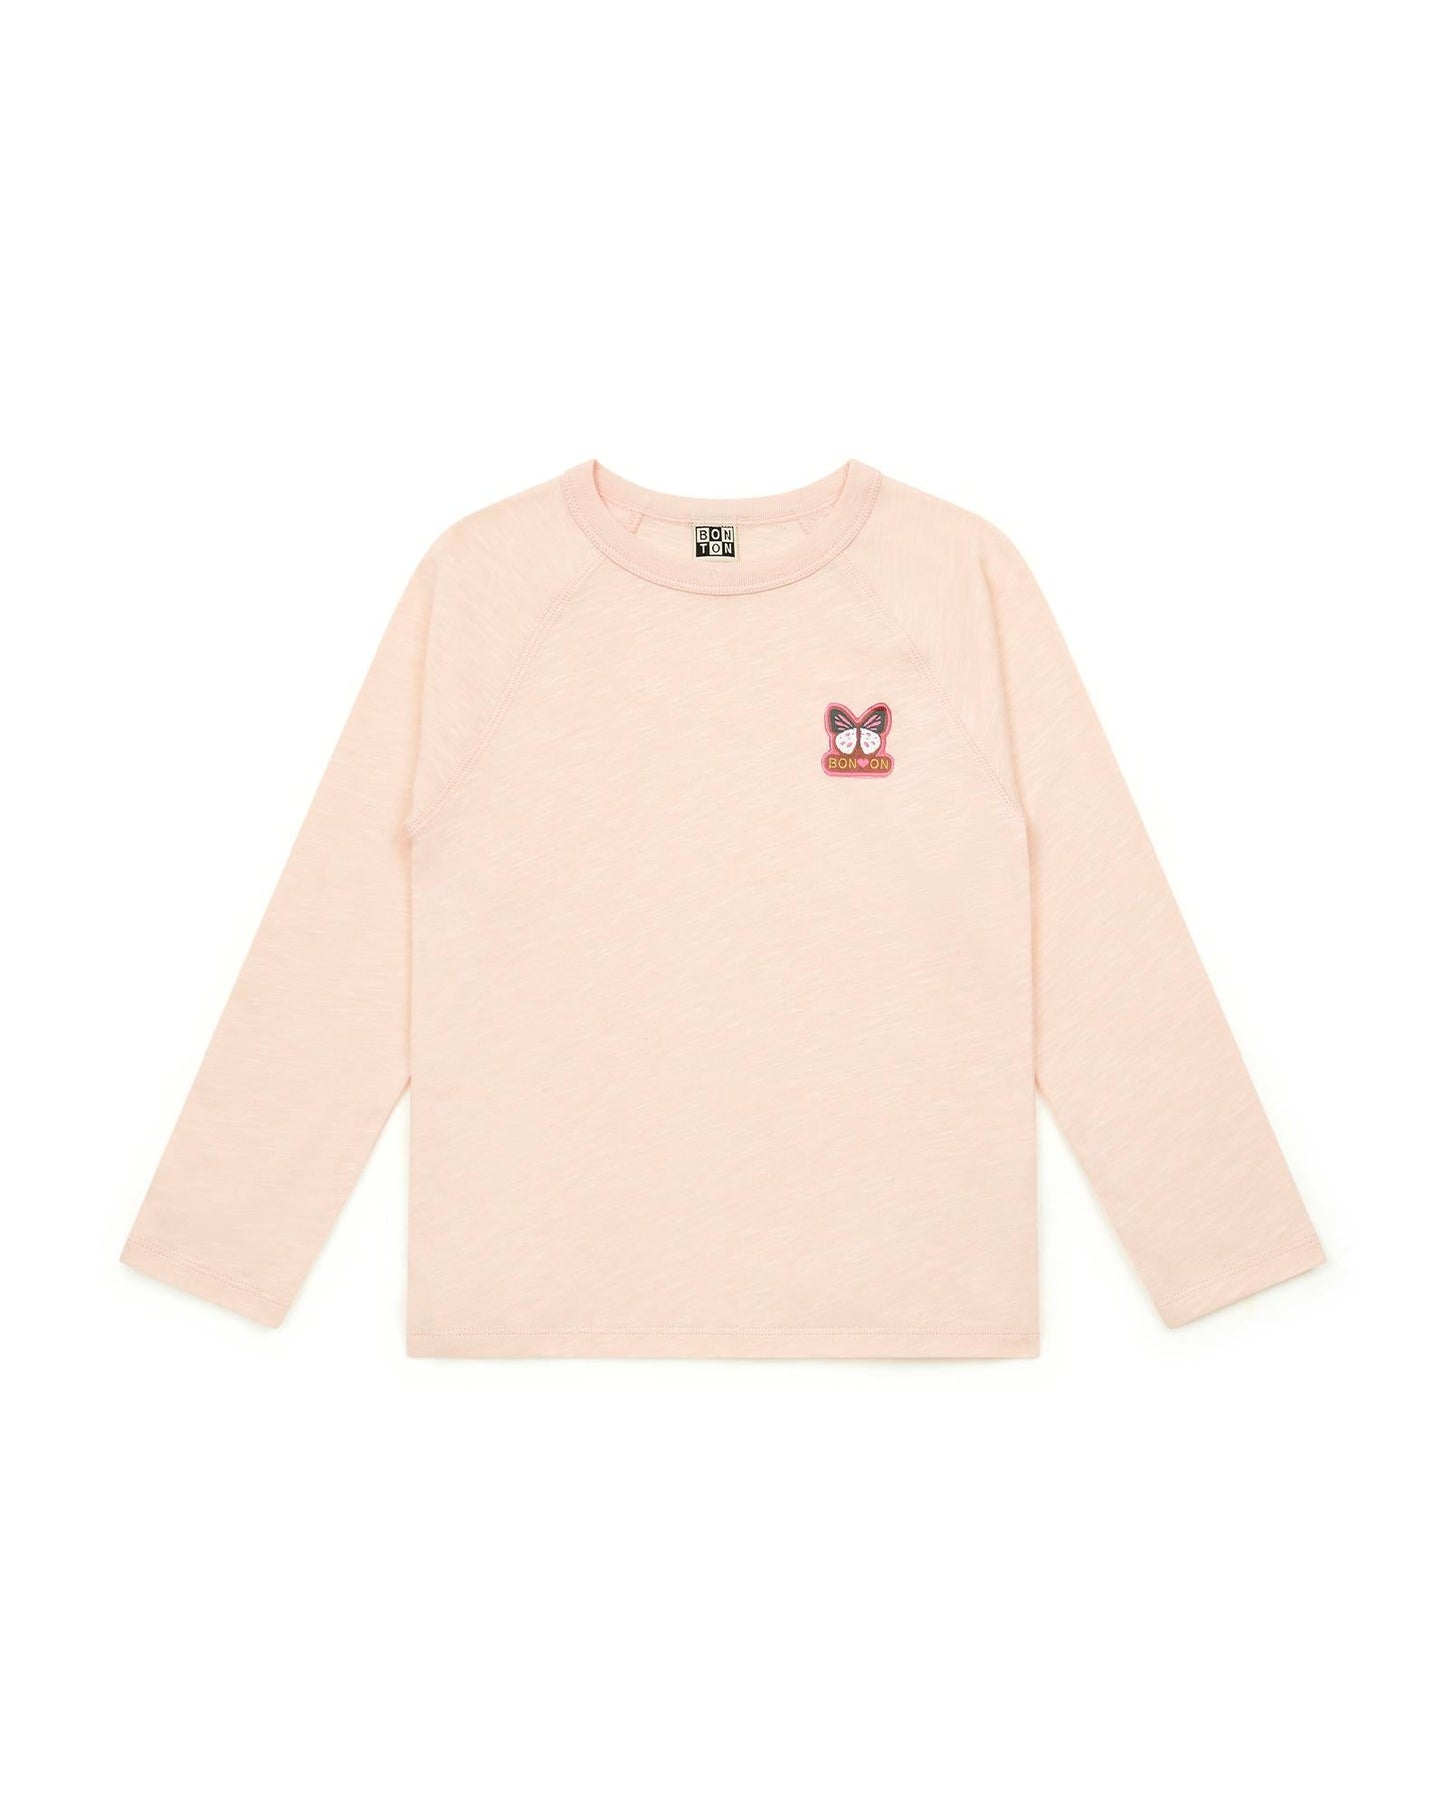 T -shirt - Badge Pink in 100% organic cotton certified GOTS